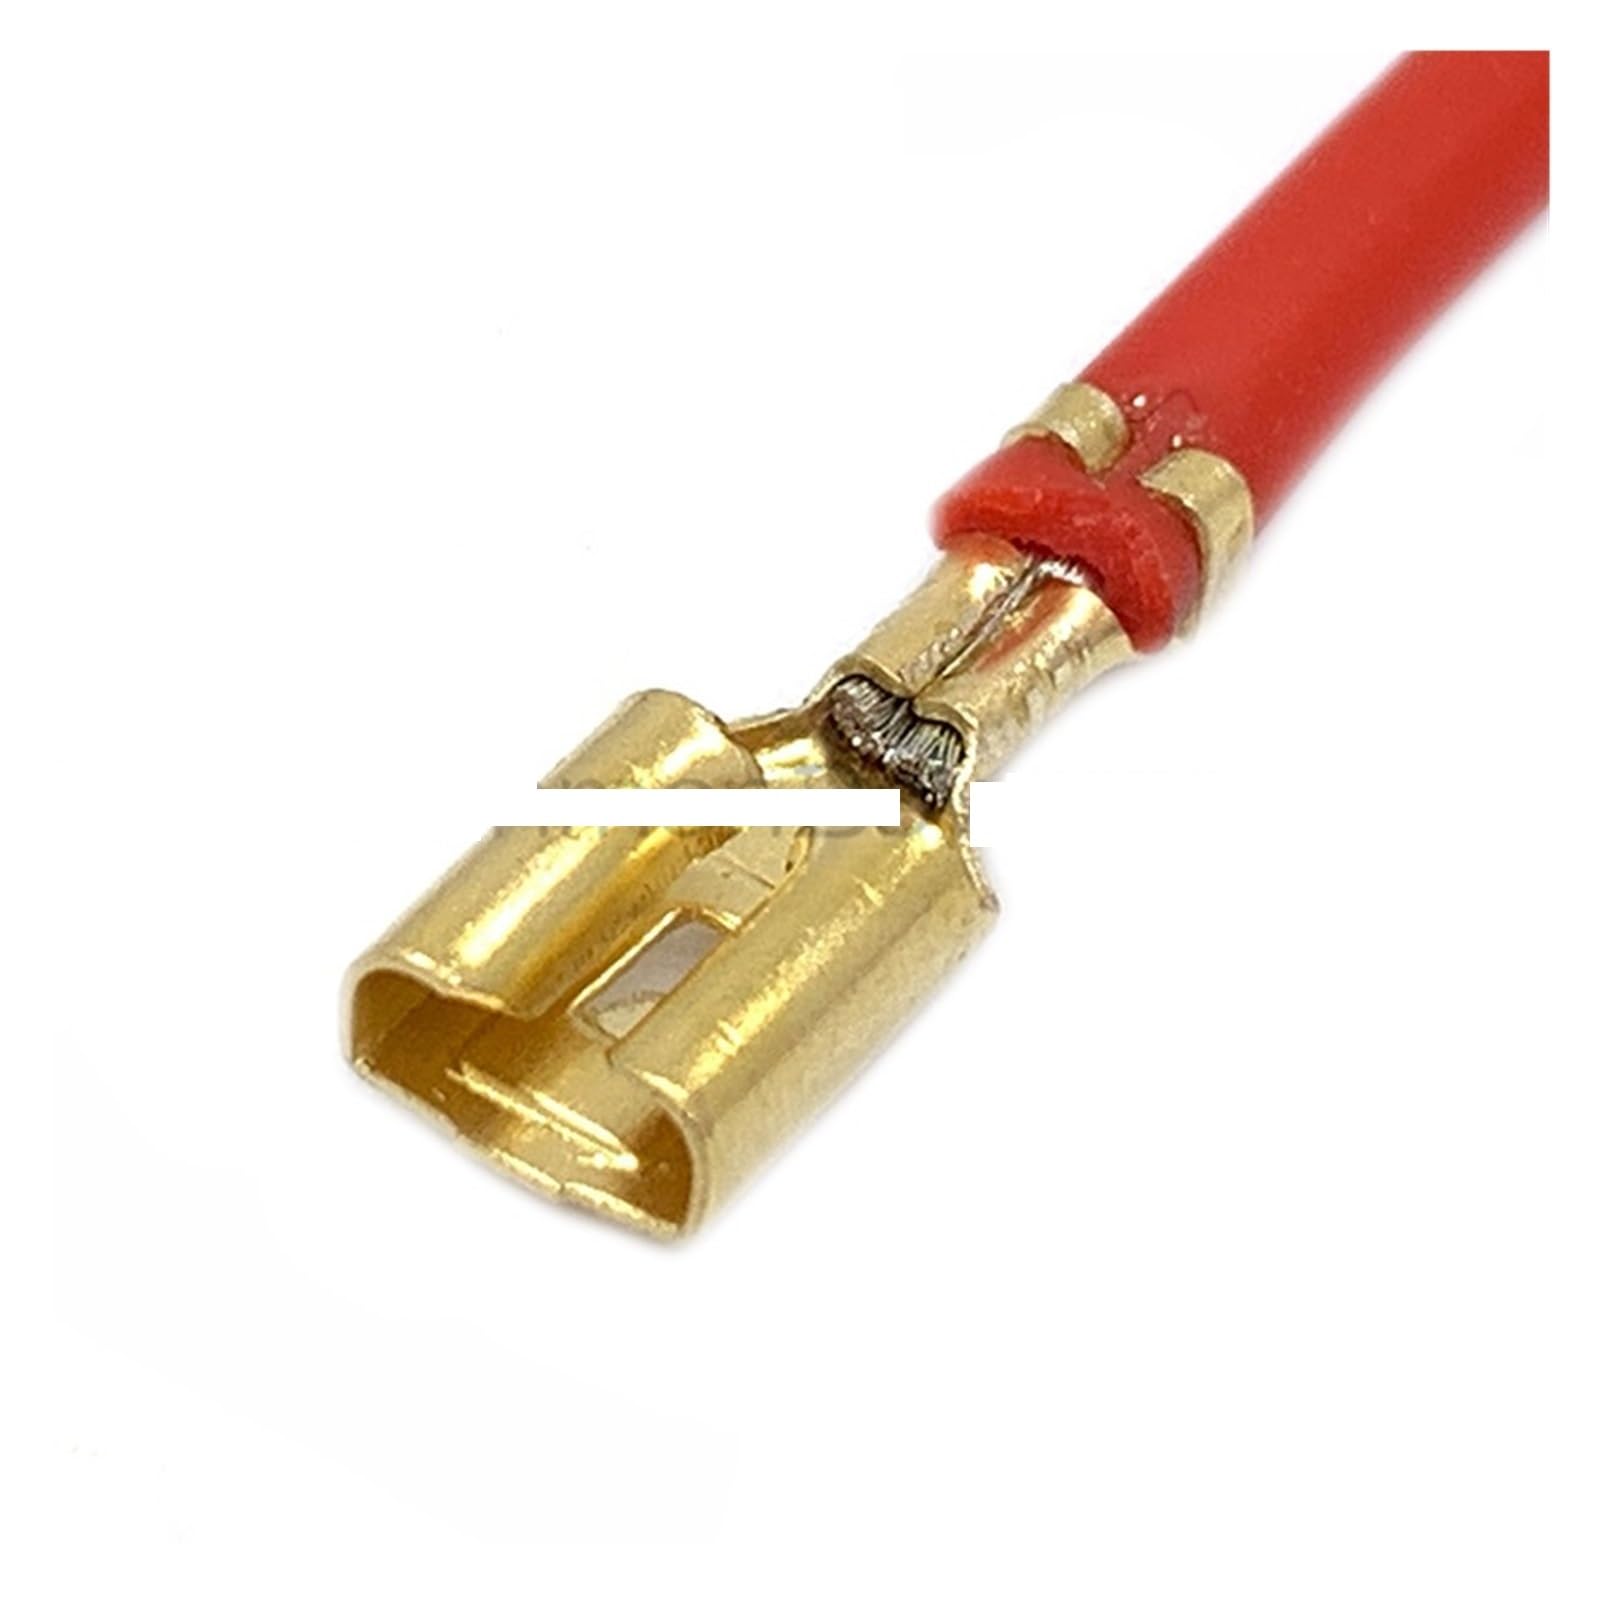 Auto-Lautsprecher 4,8 mm Messing-Buchse Crimp-Klemmen-Draht-Pin-Kupfer-elektrische Verbindungsklemmen mit 16 AWG-Kabel (Color : Female, Size : 10 Pcs)